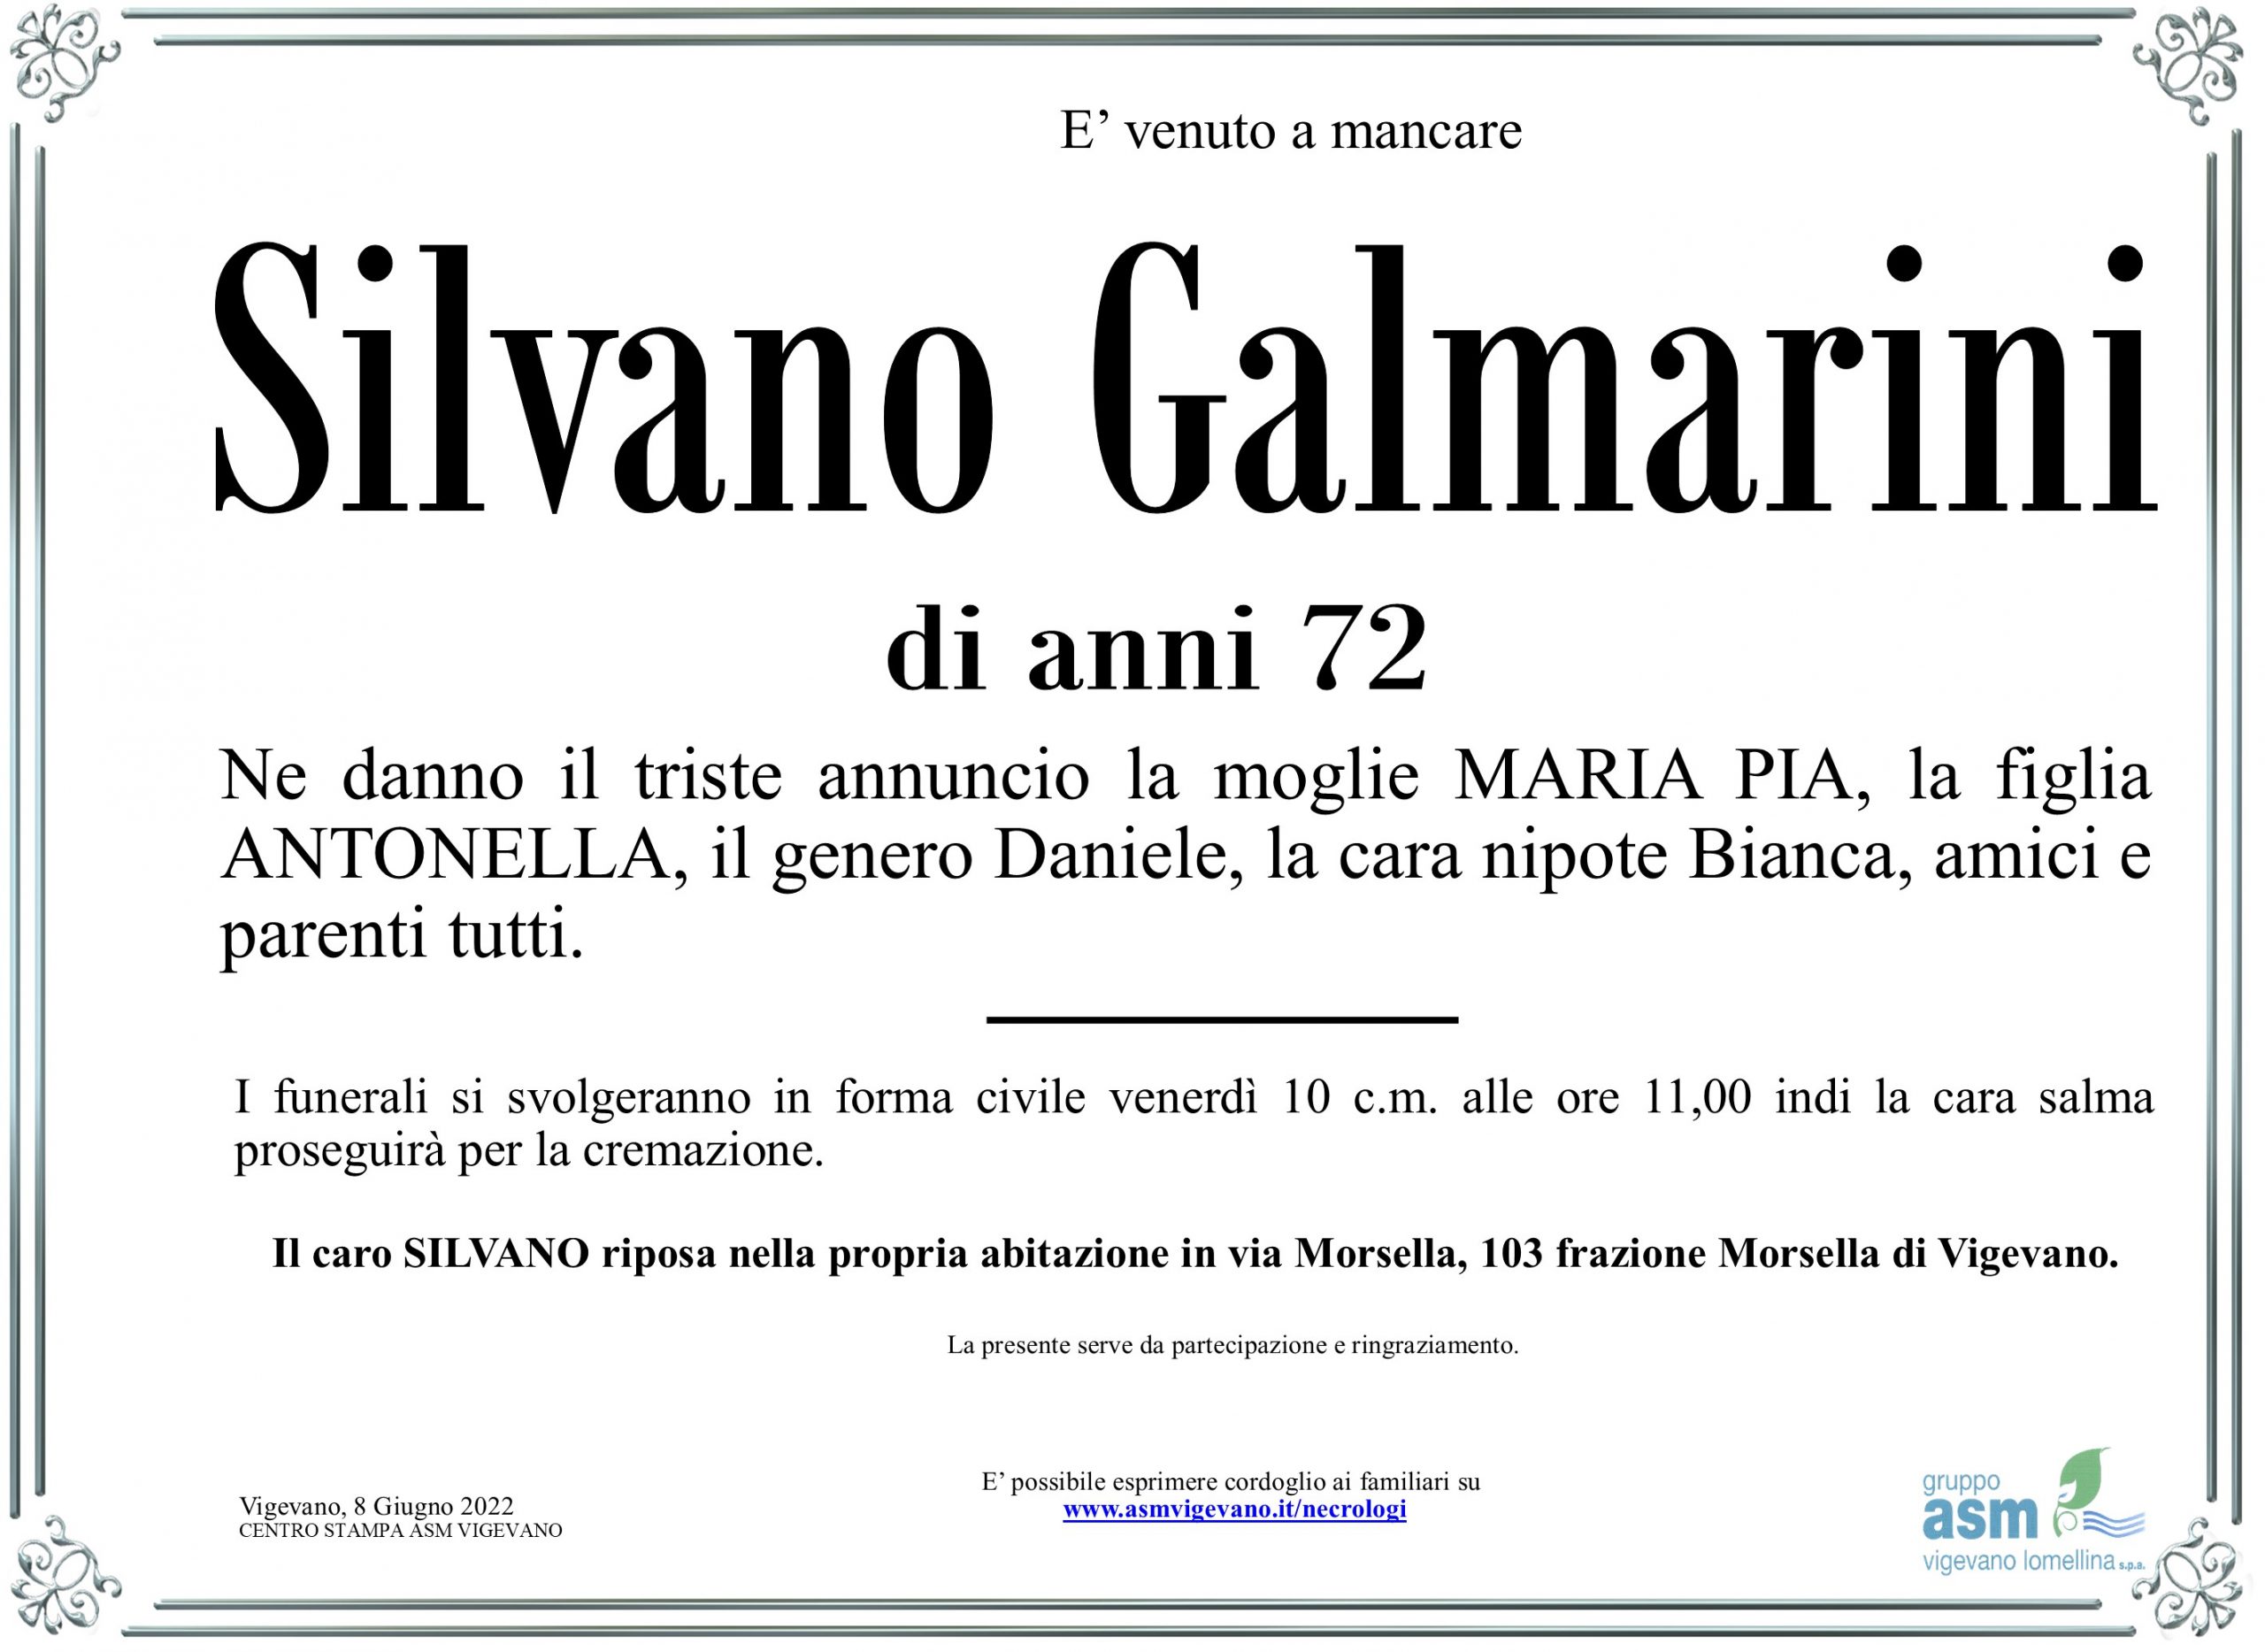 Silvano Galmarini